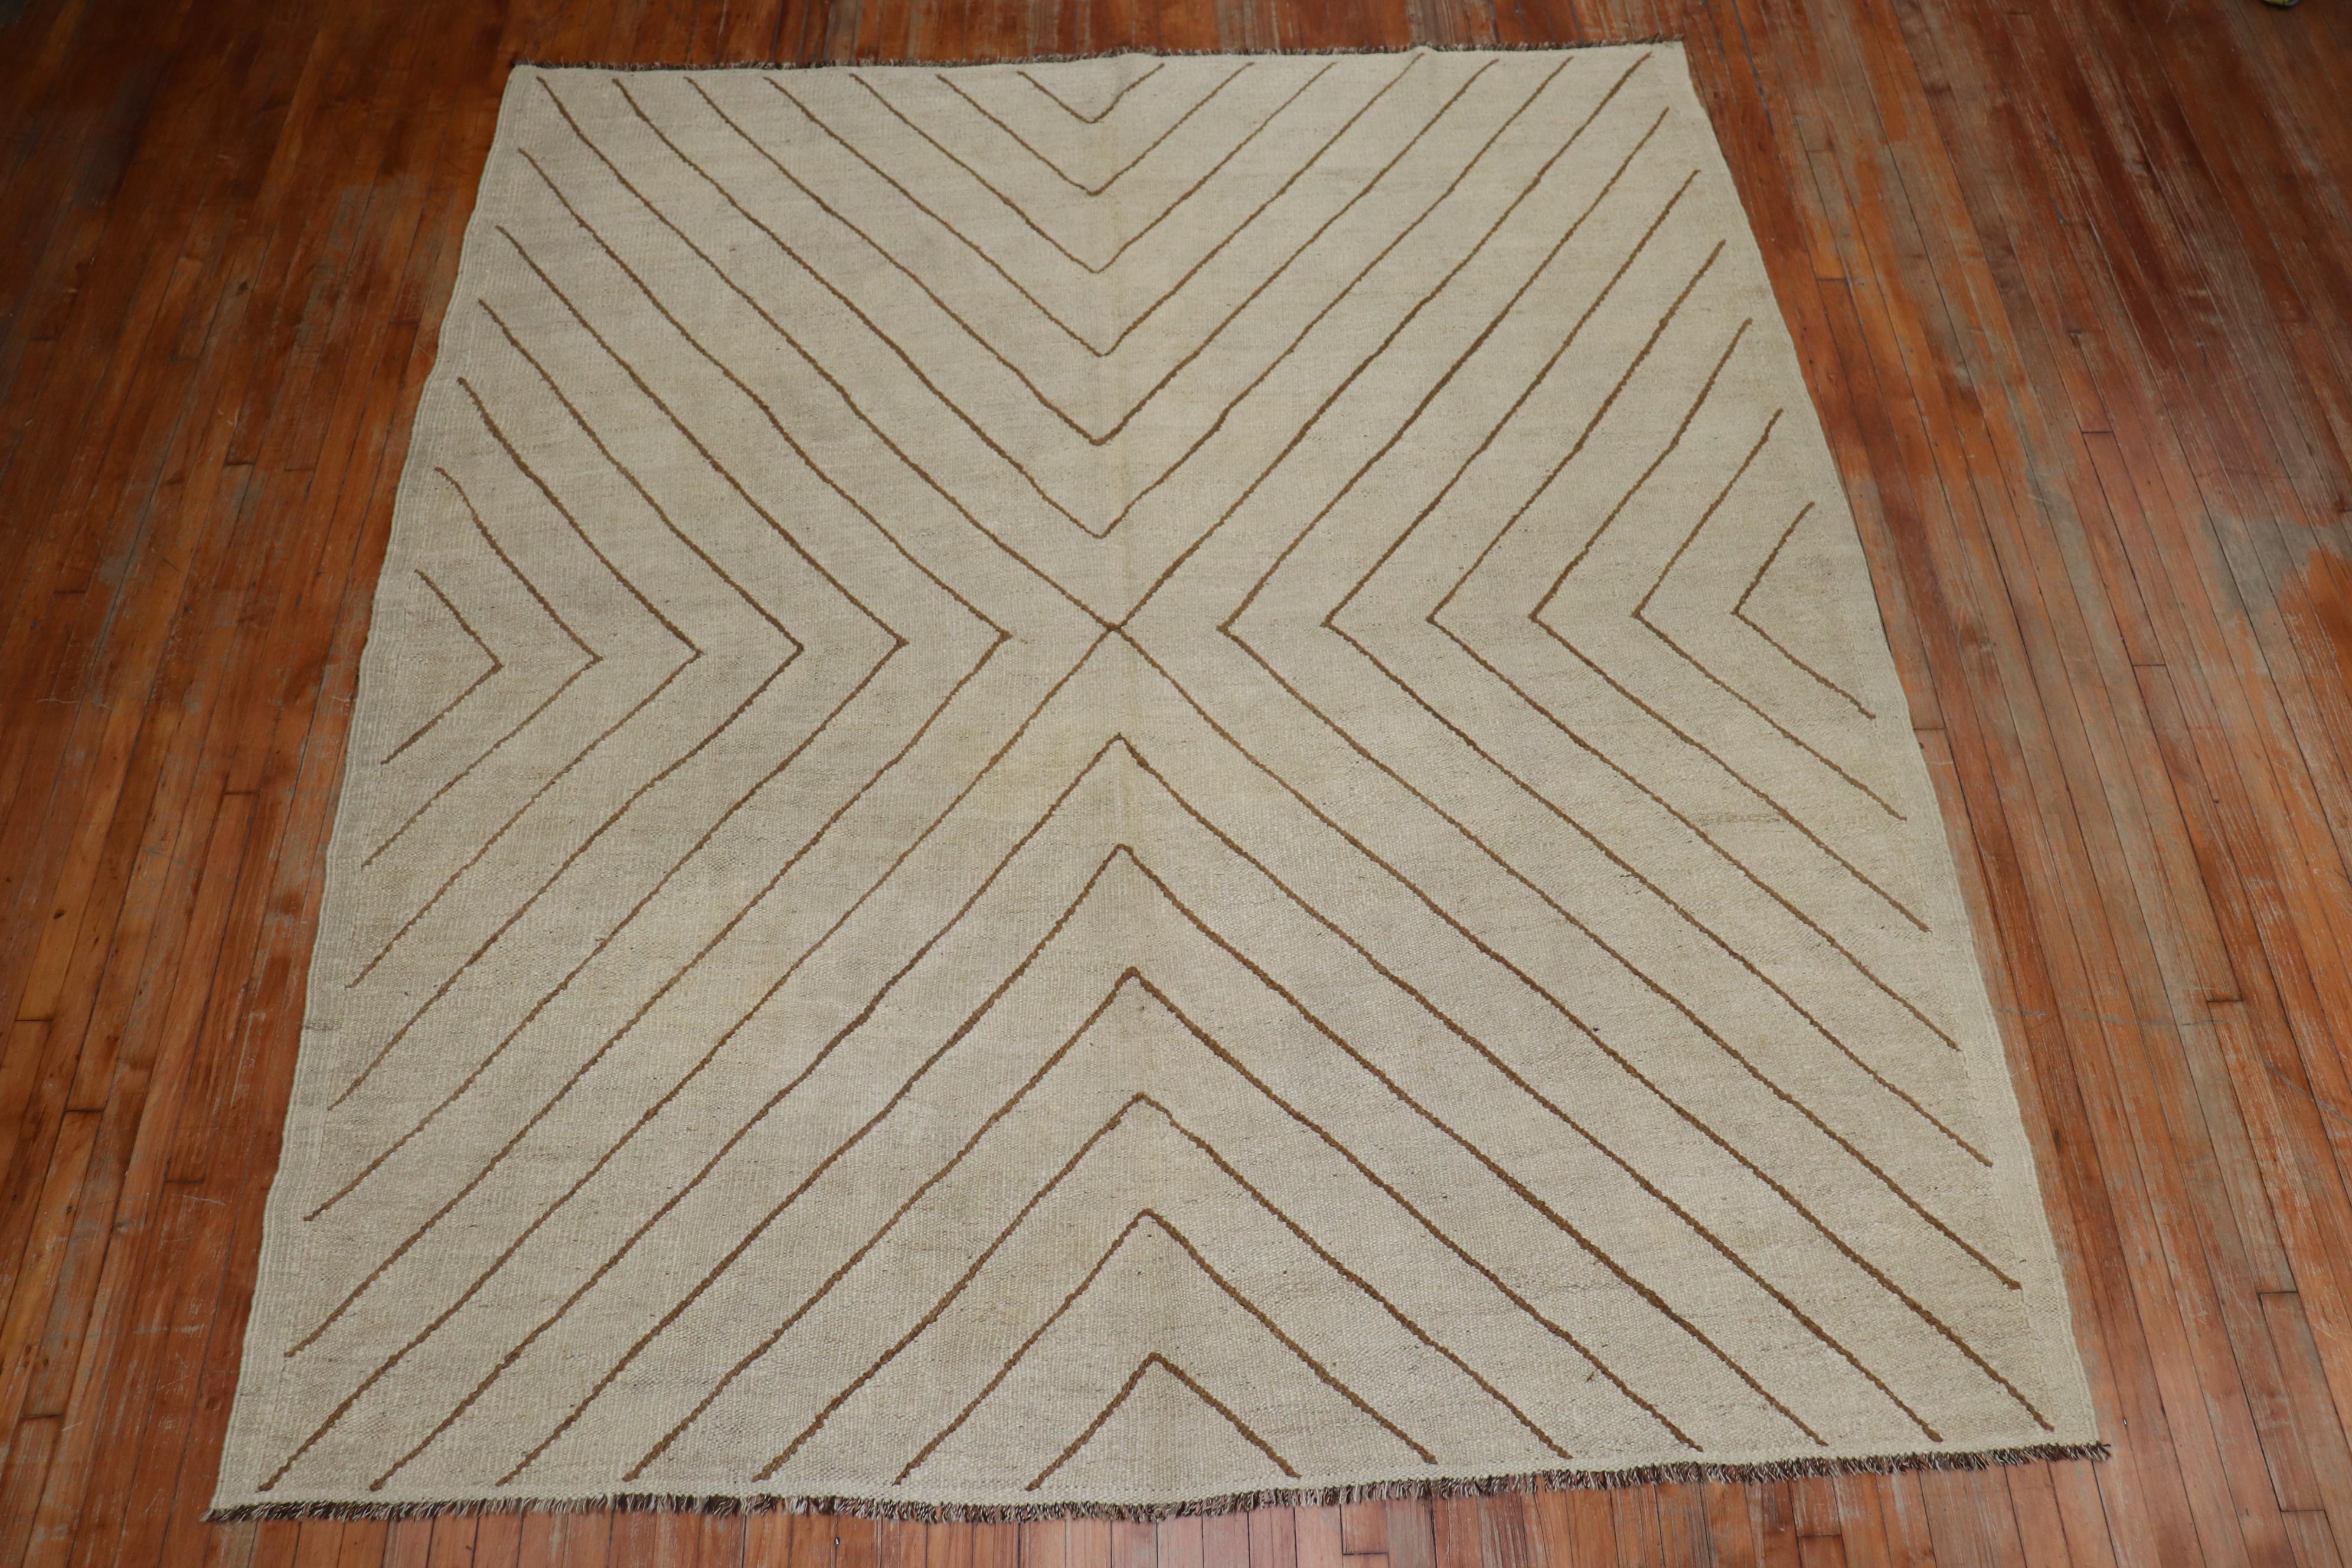 Modern Kilim with diagonally striped brown motif on a white field.

Measures: 8'2